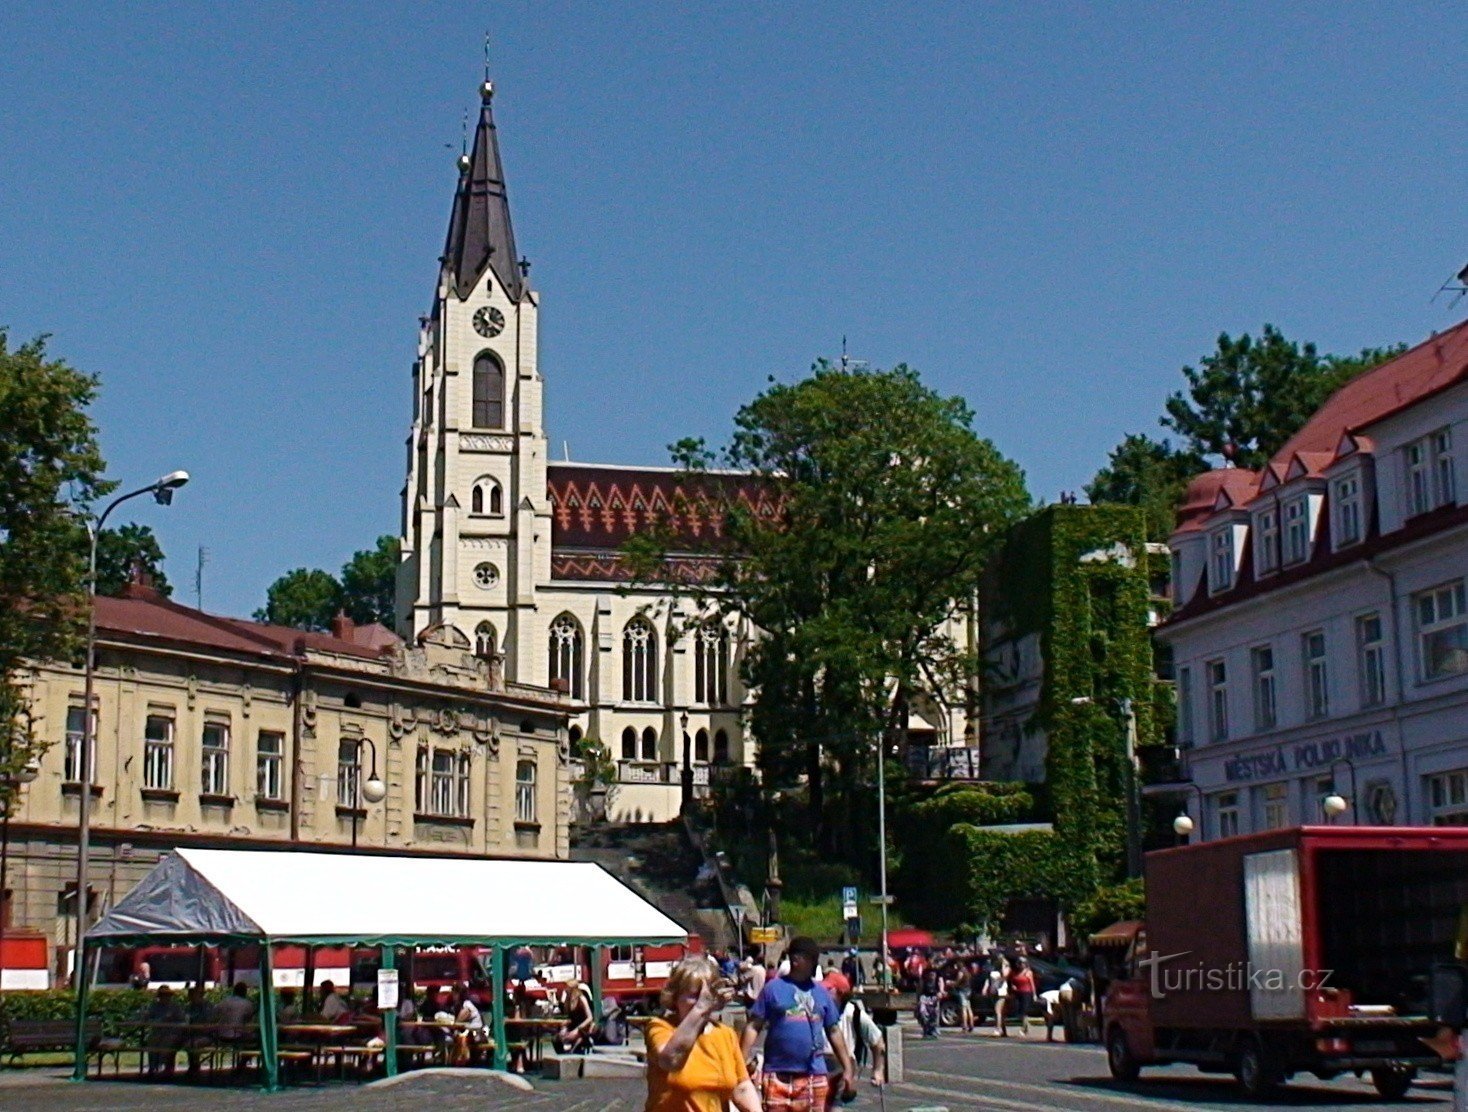 Adlerplatz